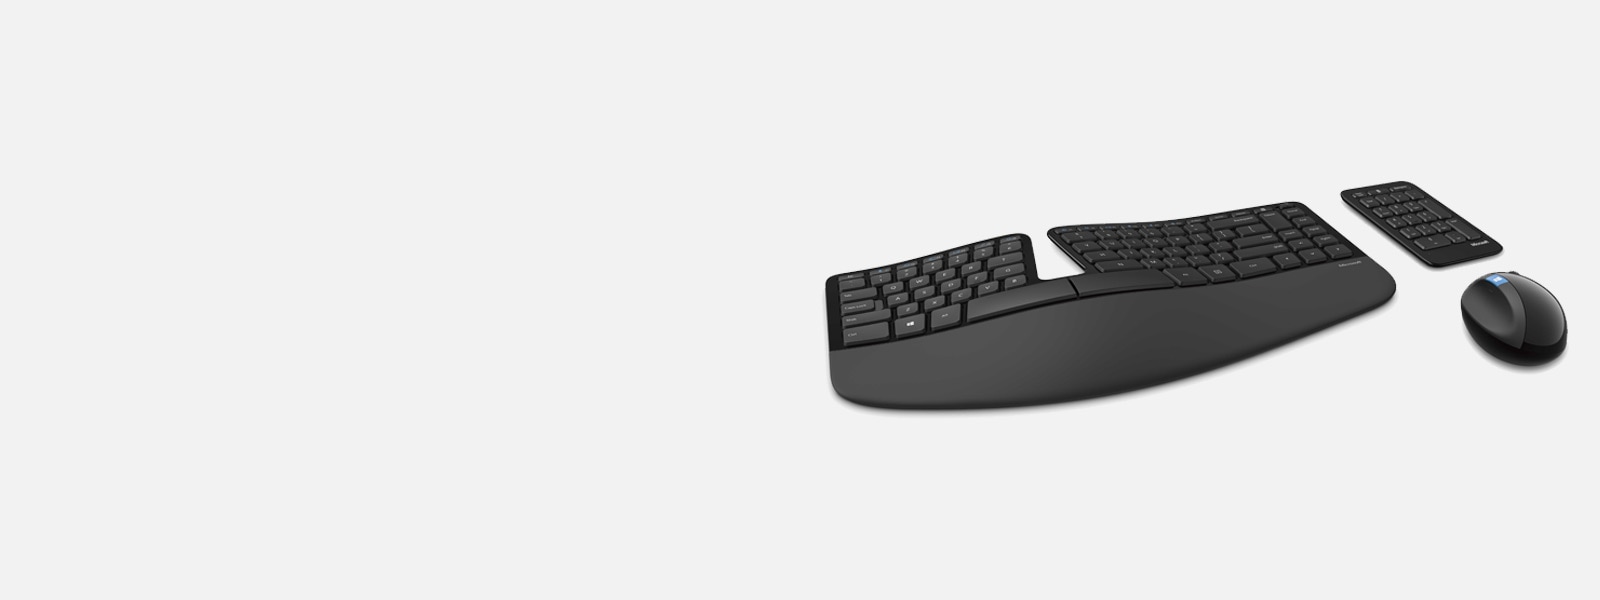 Microsoft Sculpt Ergonomic Keyboard, Mouse and Number Pad desktop